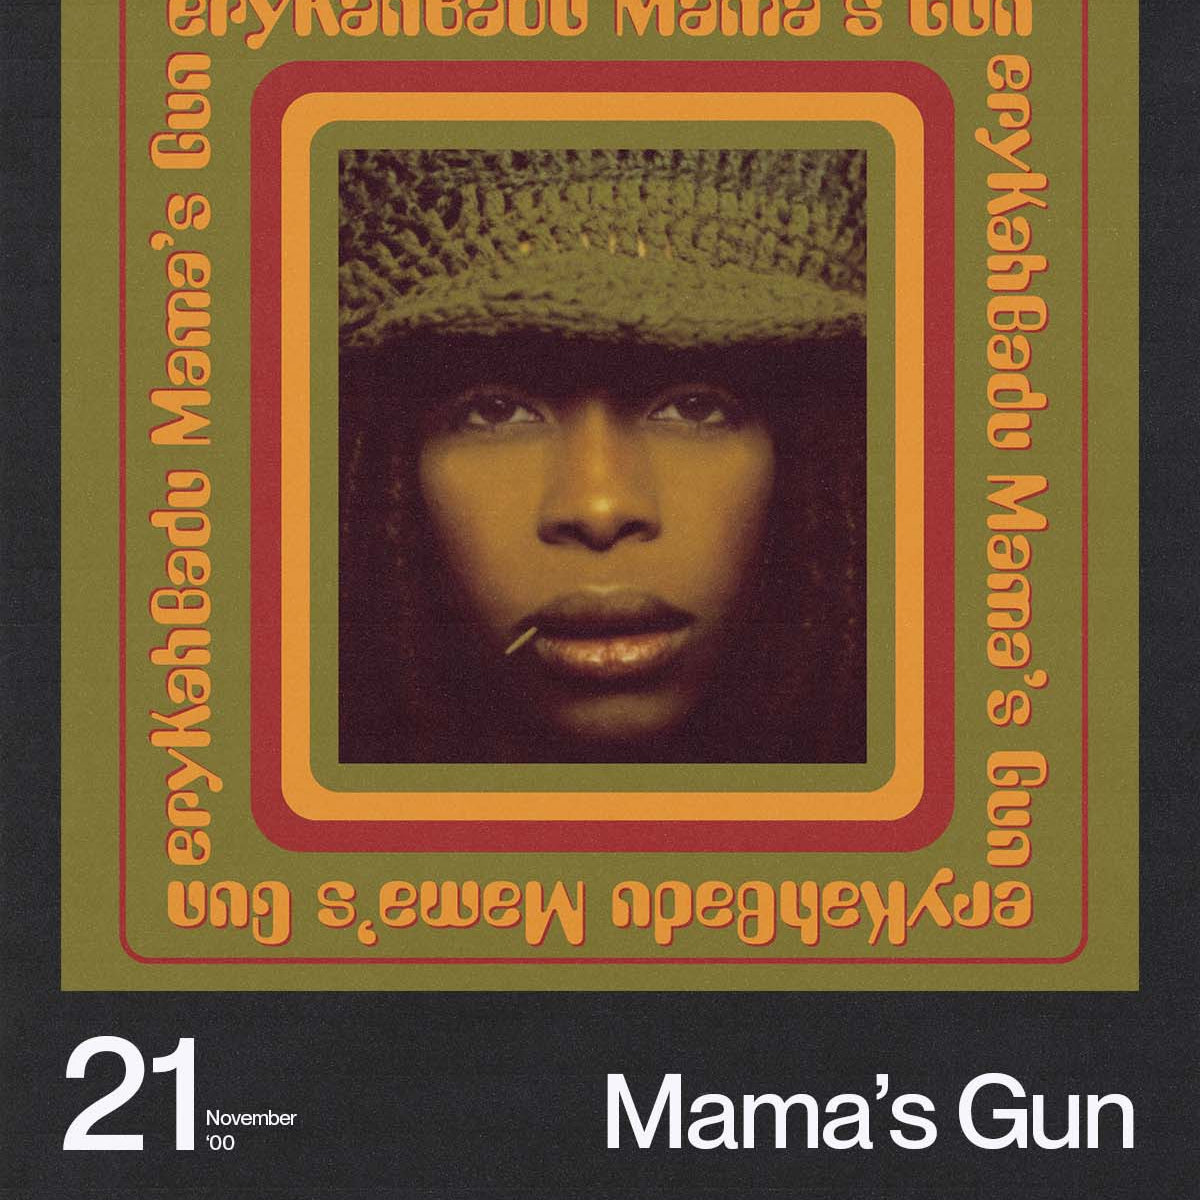 Mama's Gun - Erykah Badu Poster